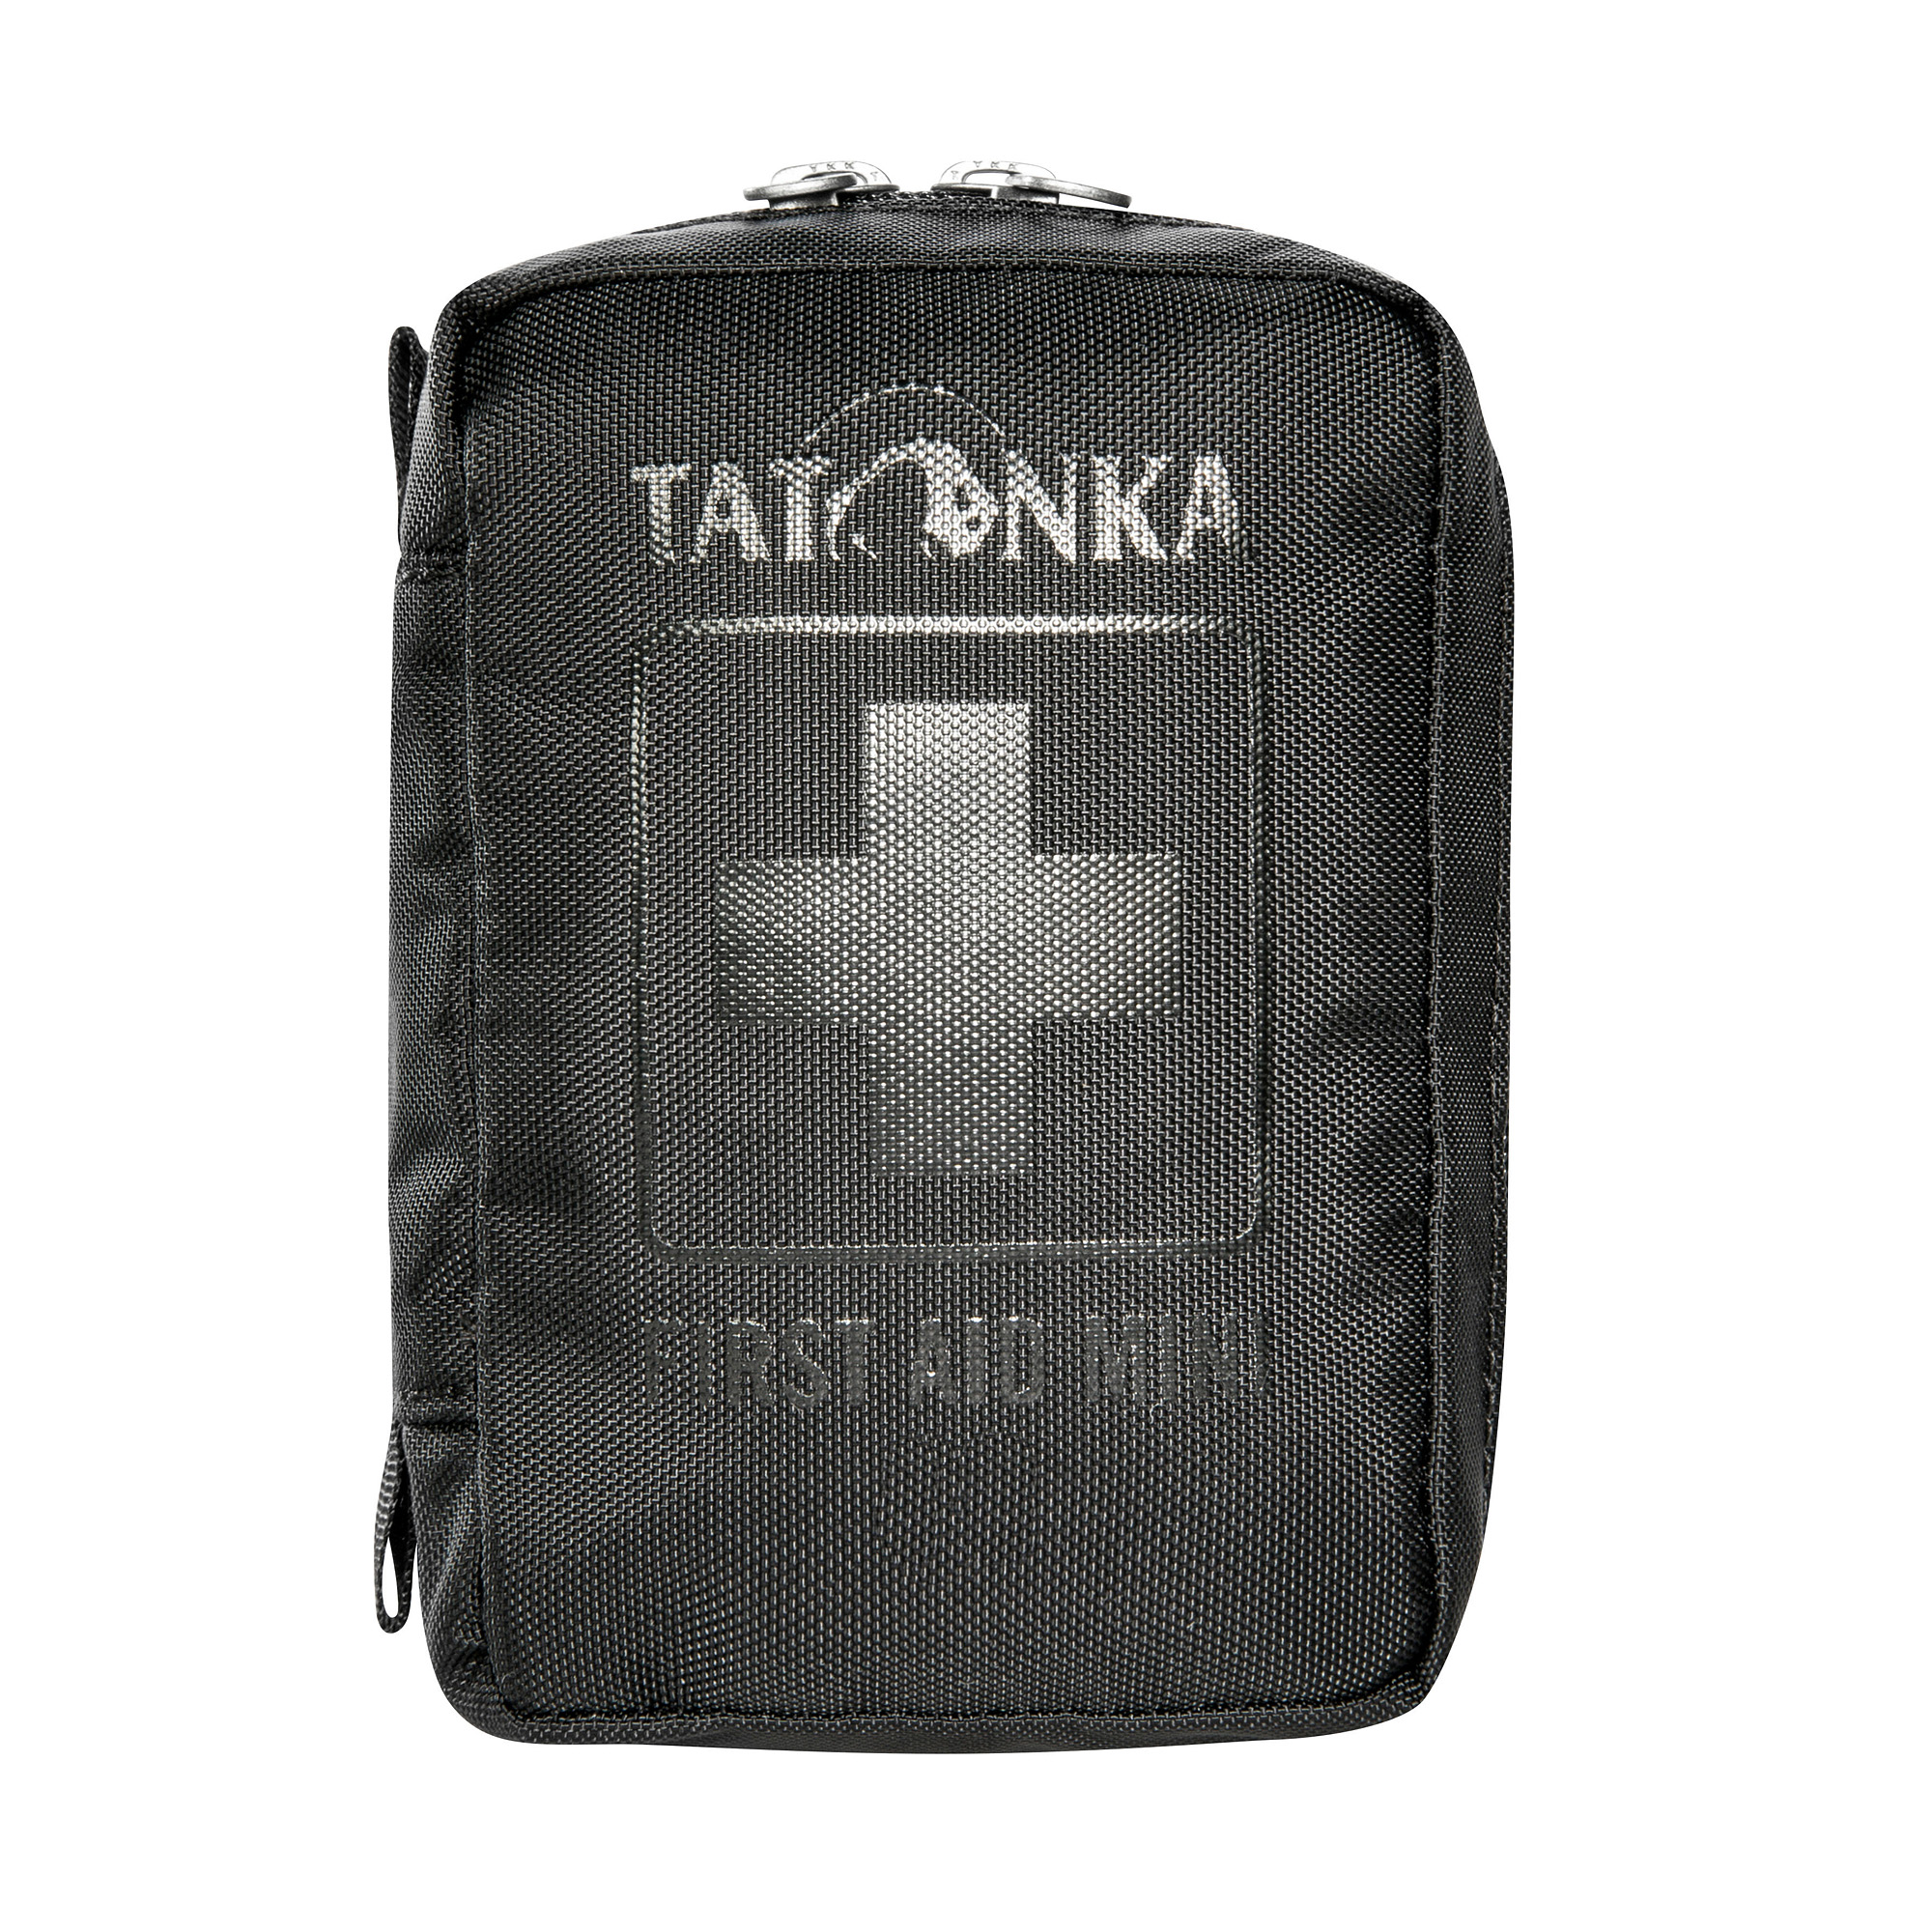 Tatonka First Aid Mini black schwarz Rucksack-Zubehör 4013236341218